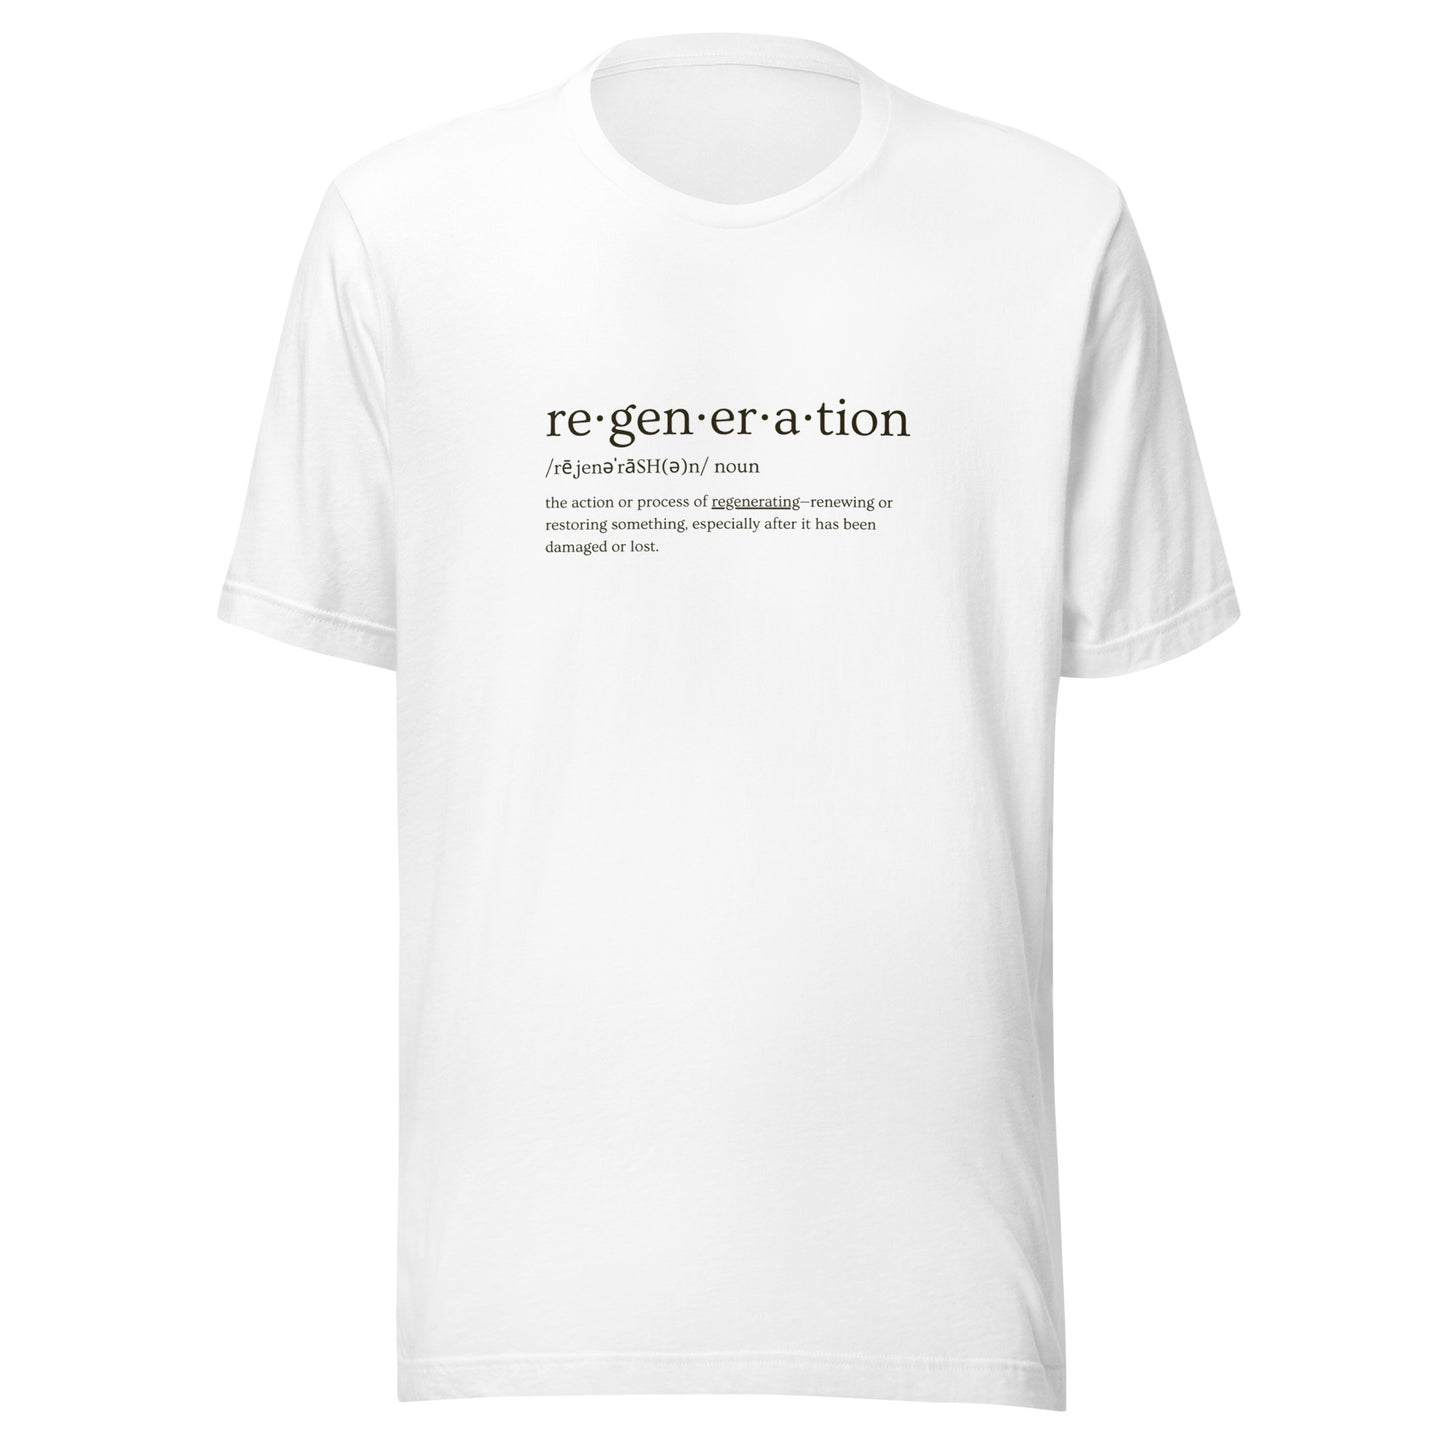 Regeneration Meaning T-Shirt